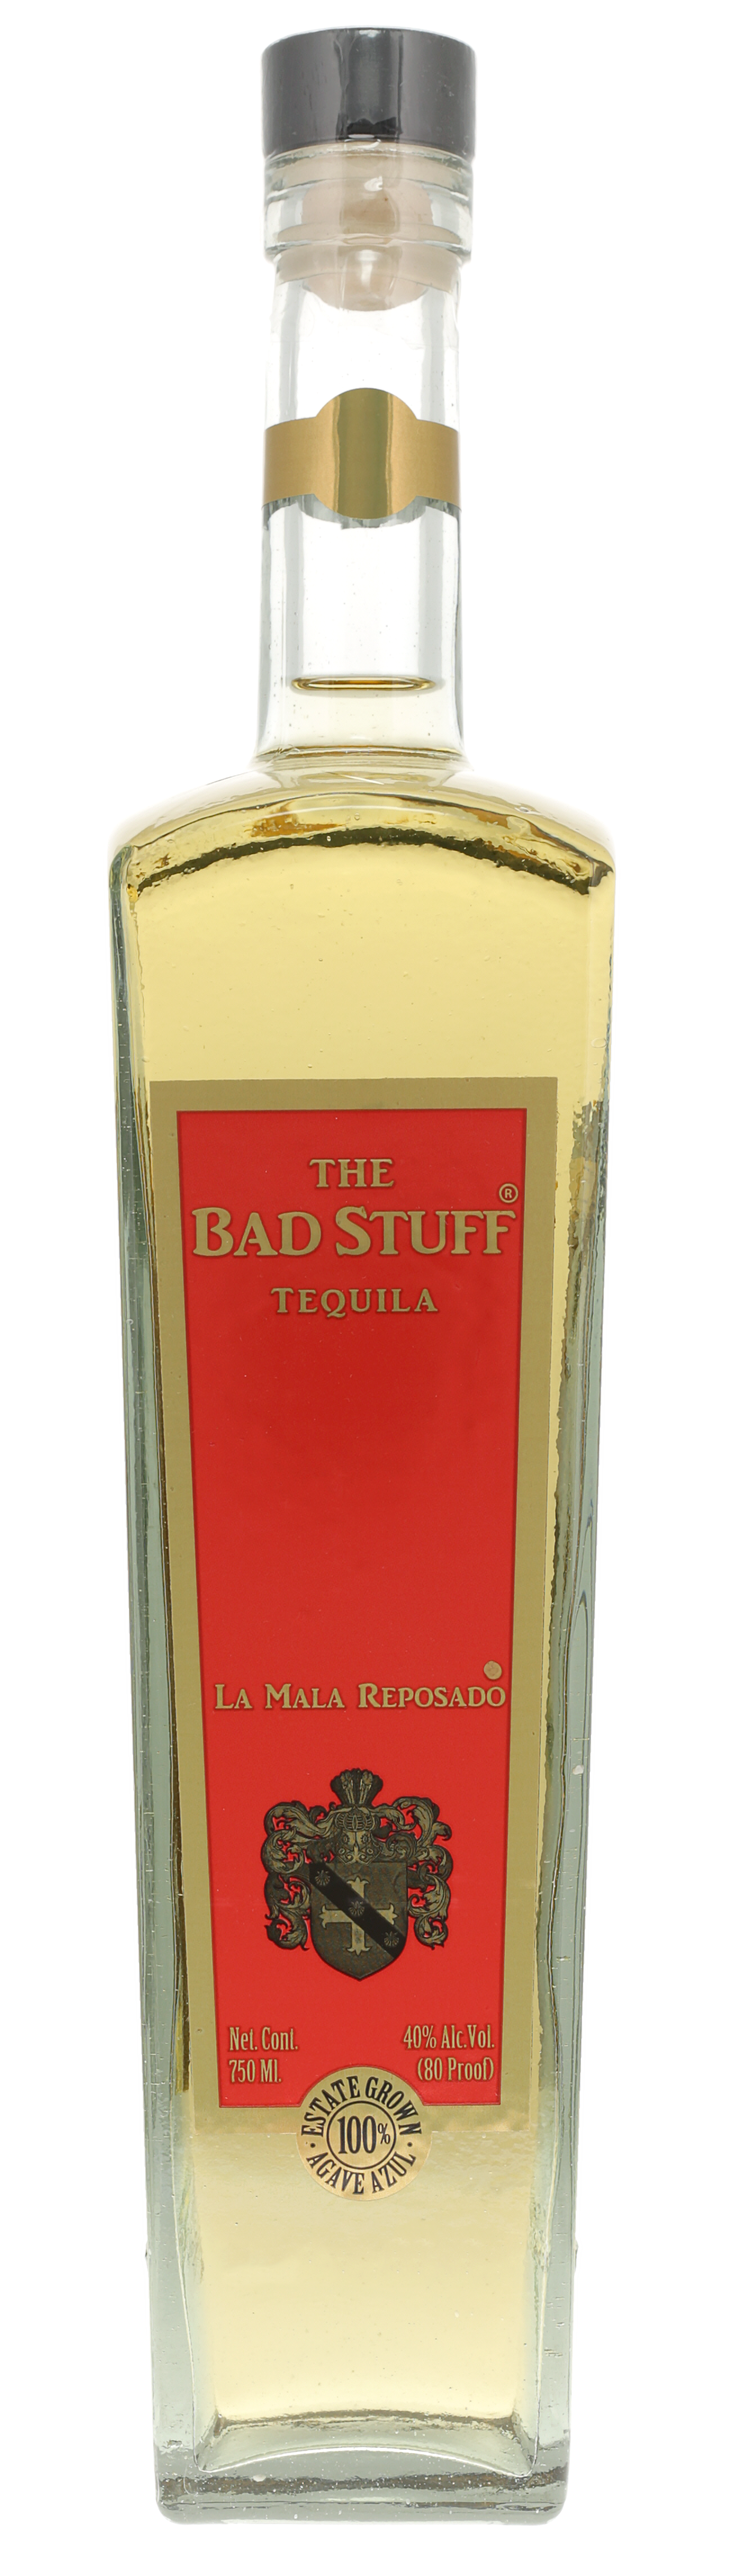 The Bad Stuff La Mala Reposado Tequila